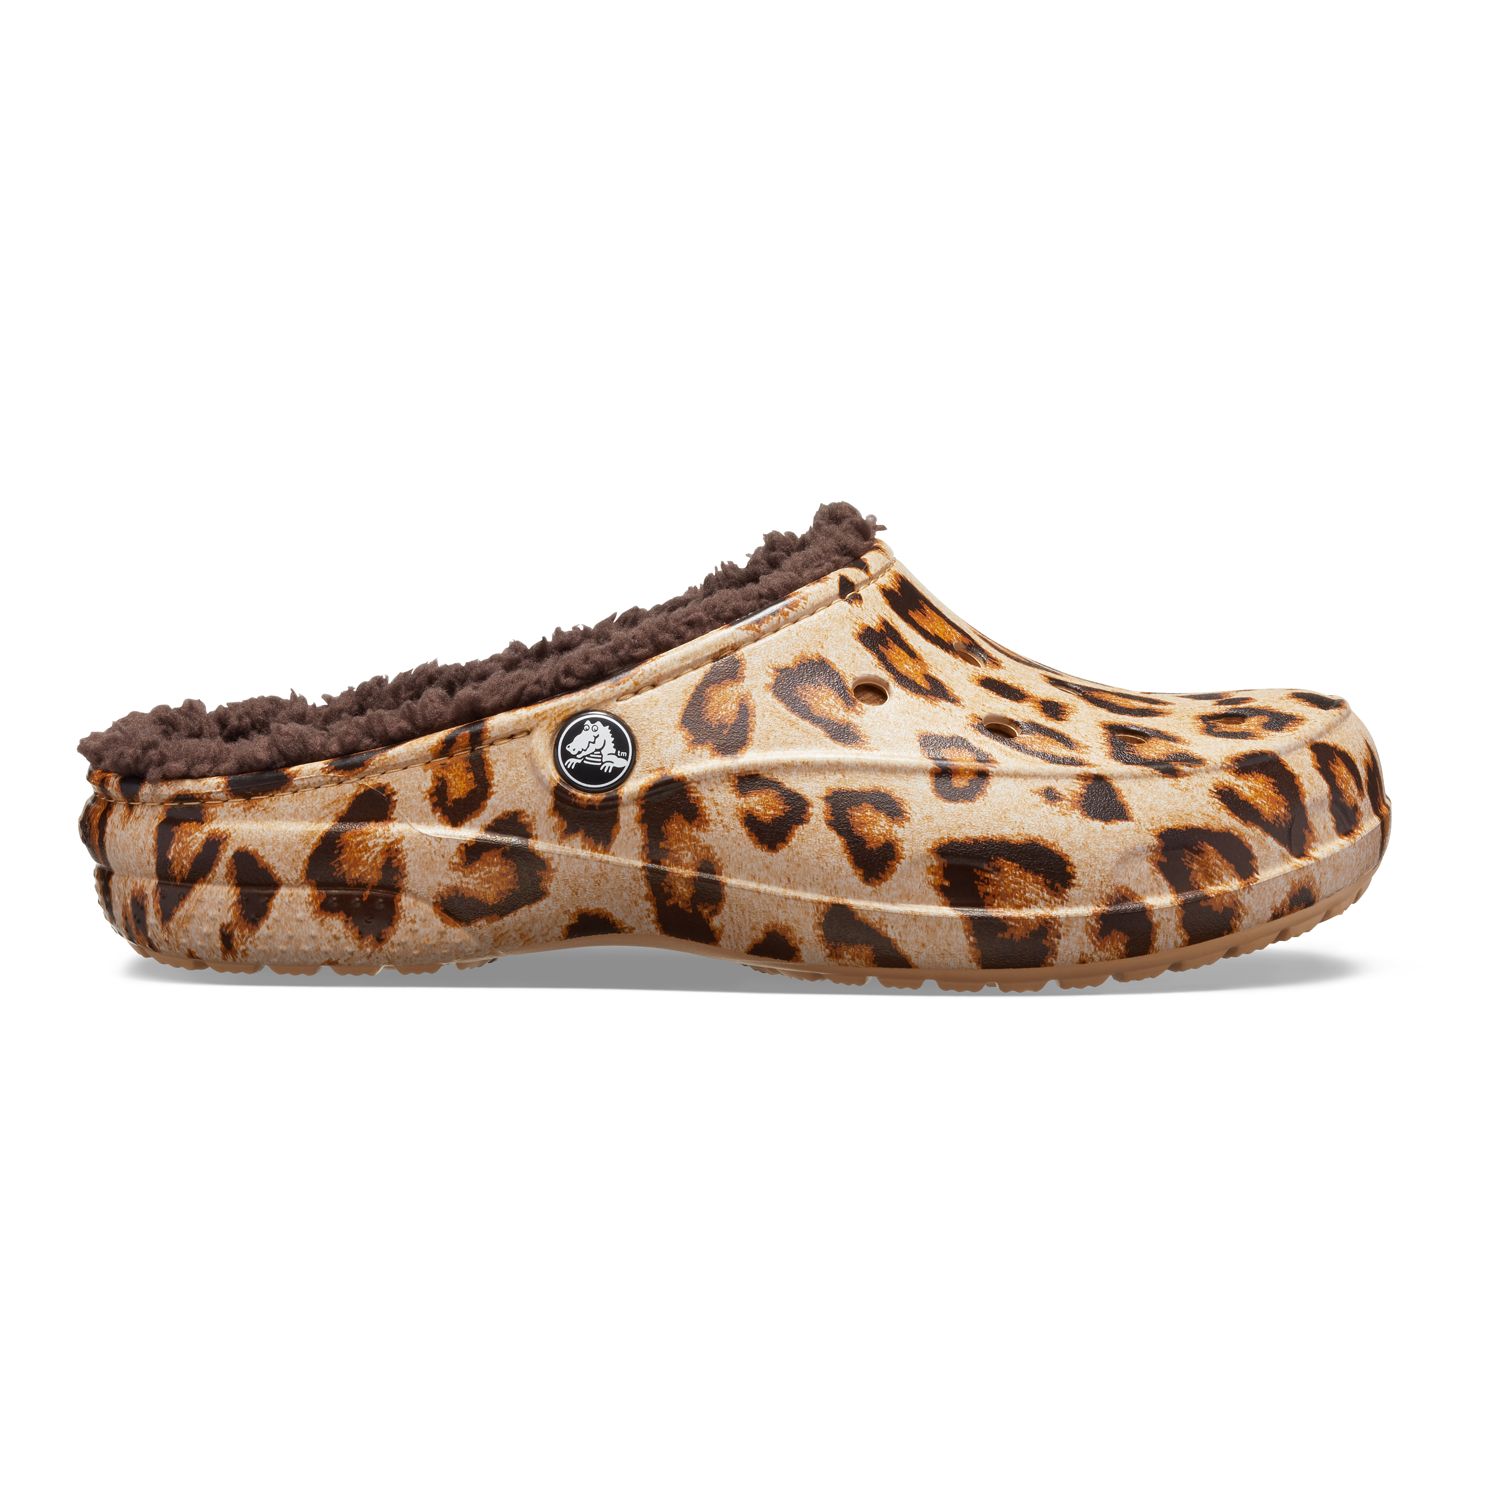 cheetah fuzzy crocs